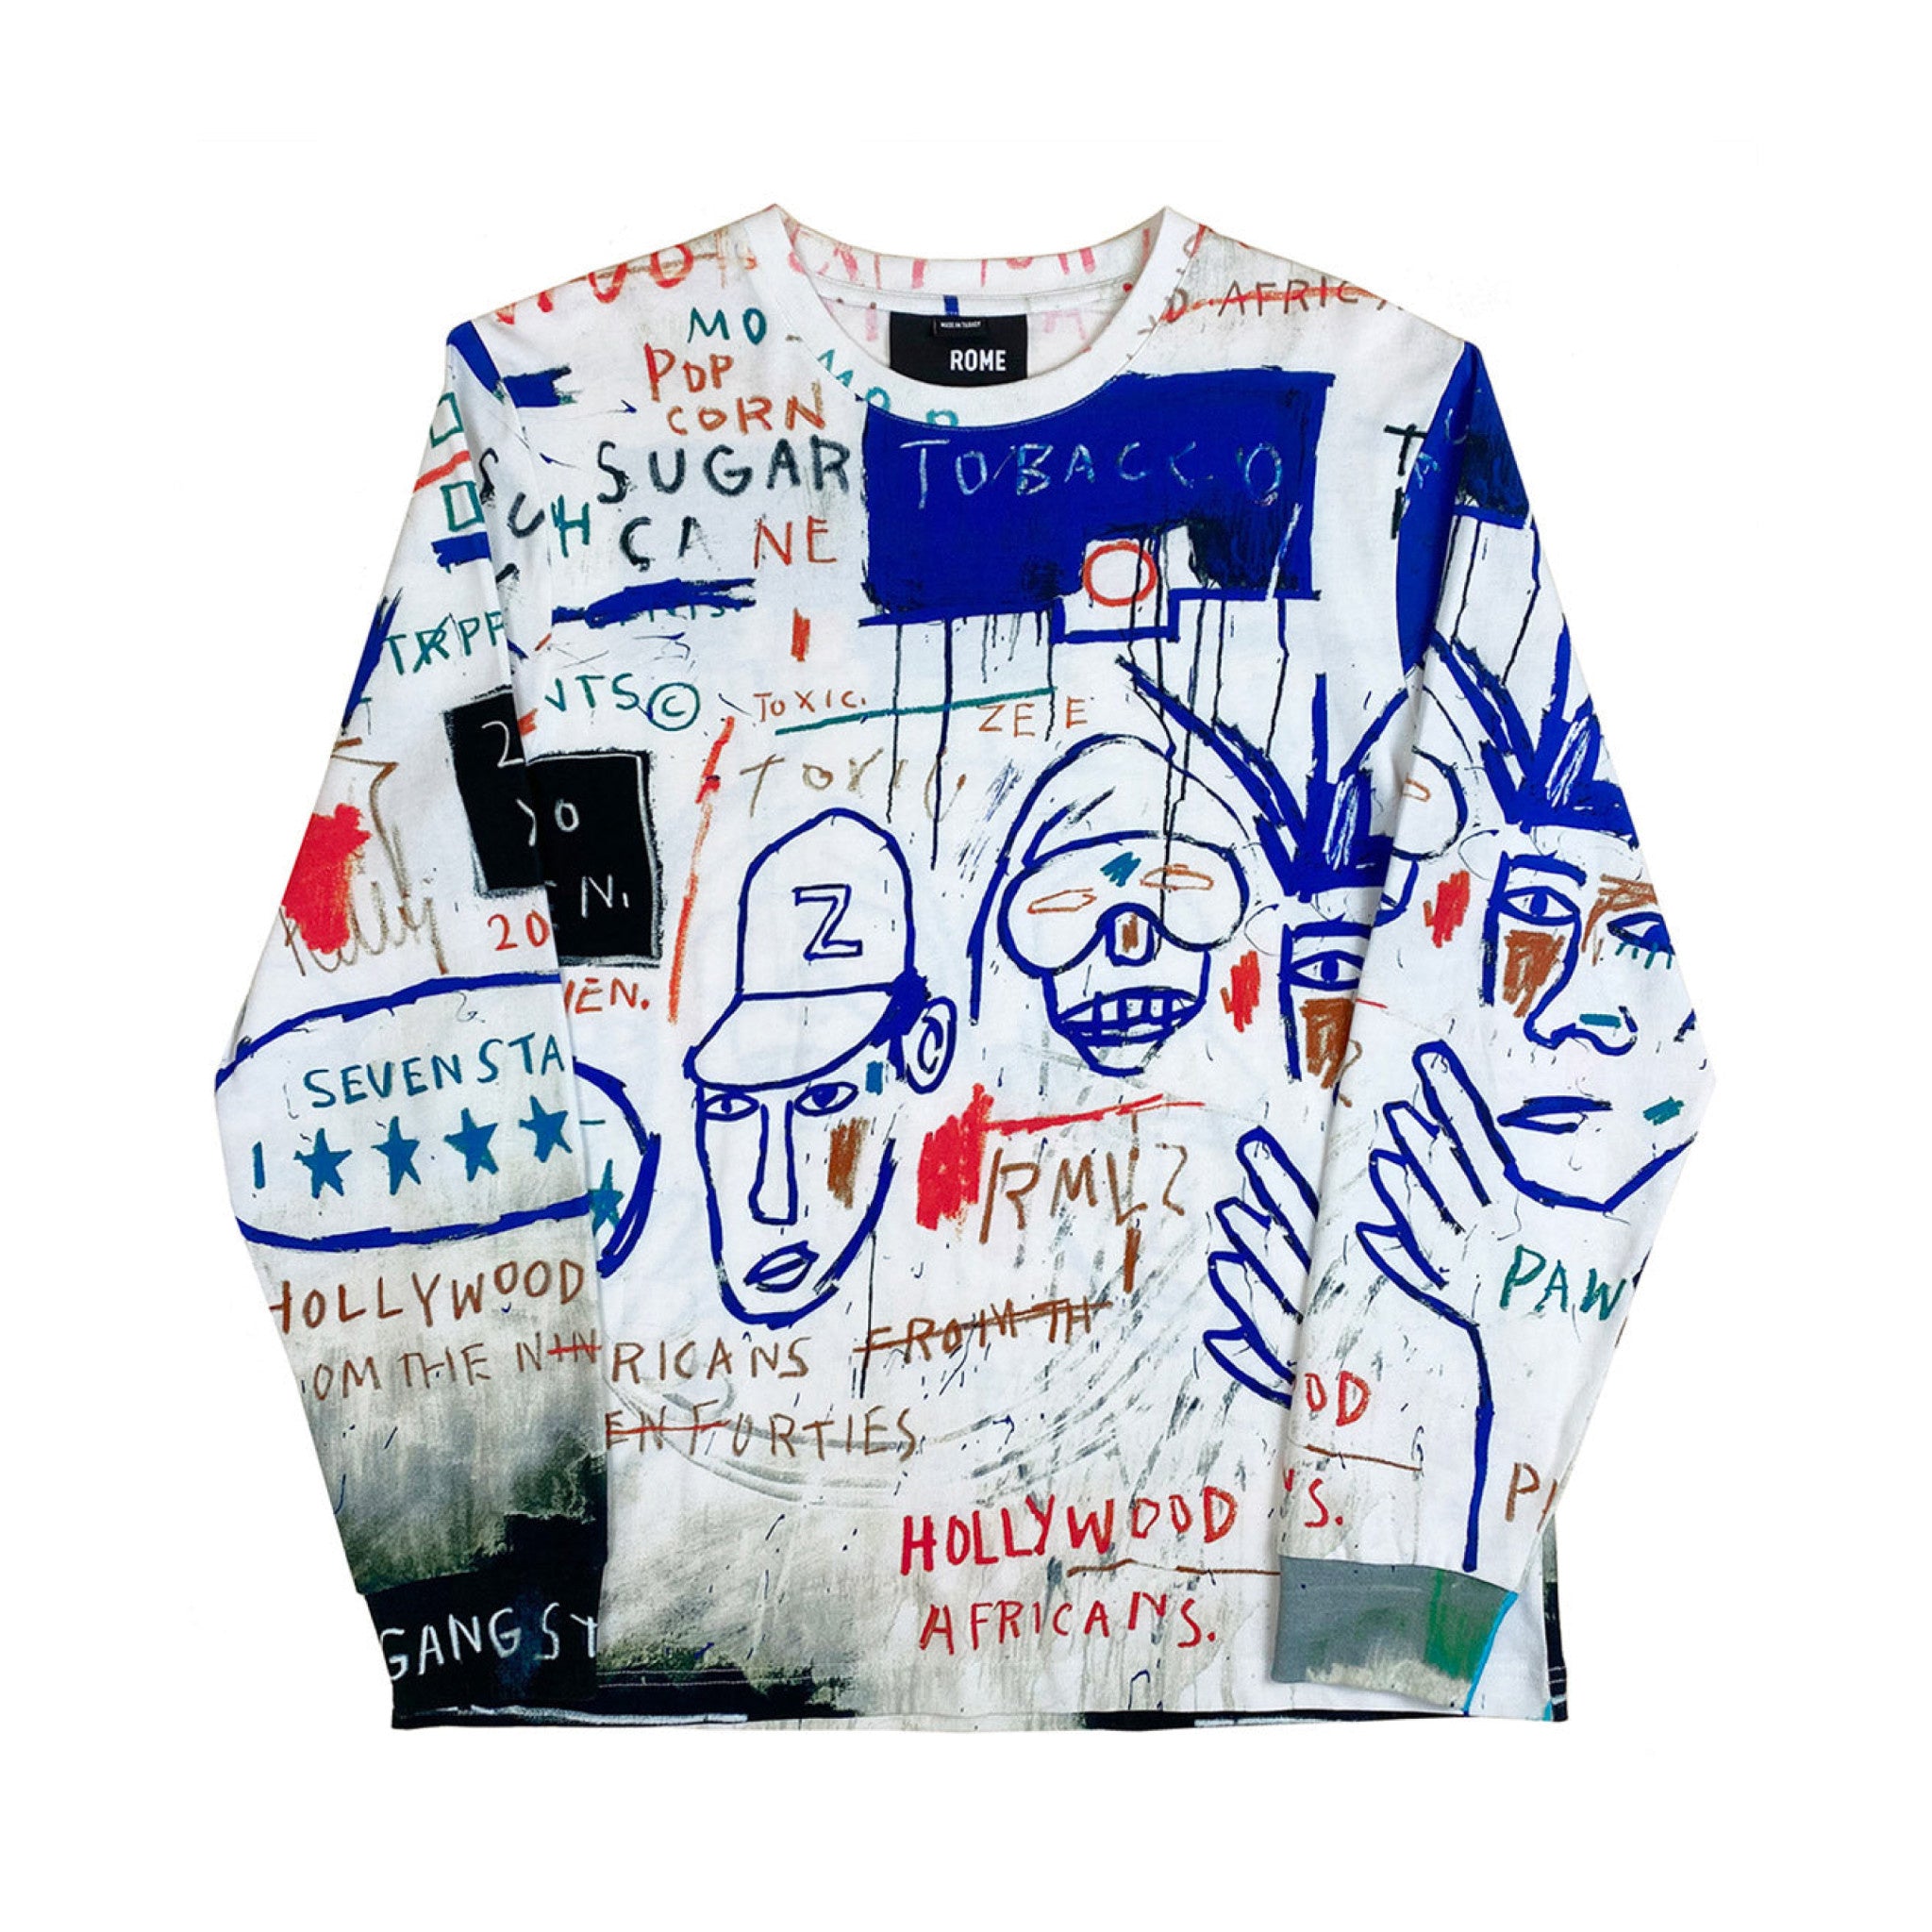 Basquiat HOLLYWOOD AFRICANS All-Over Long-Sleeve Shirt - Wynwood Walls Shop